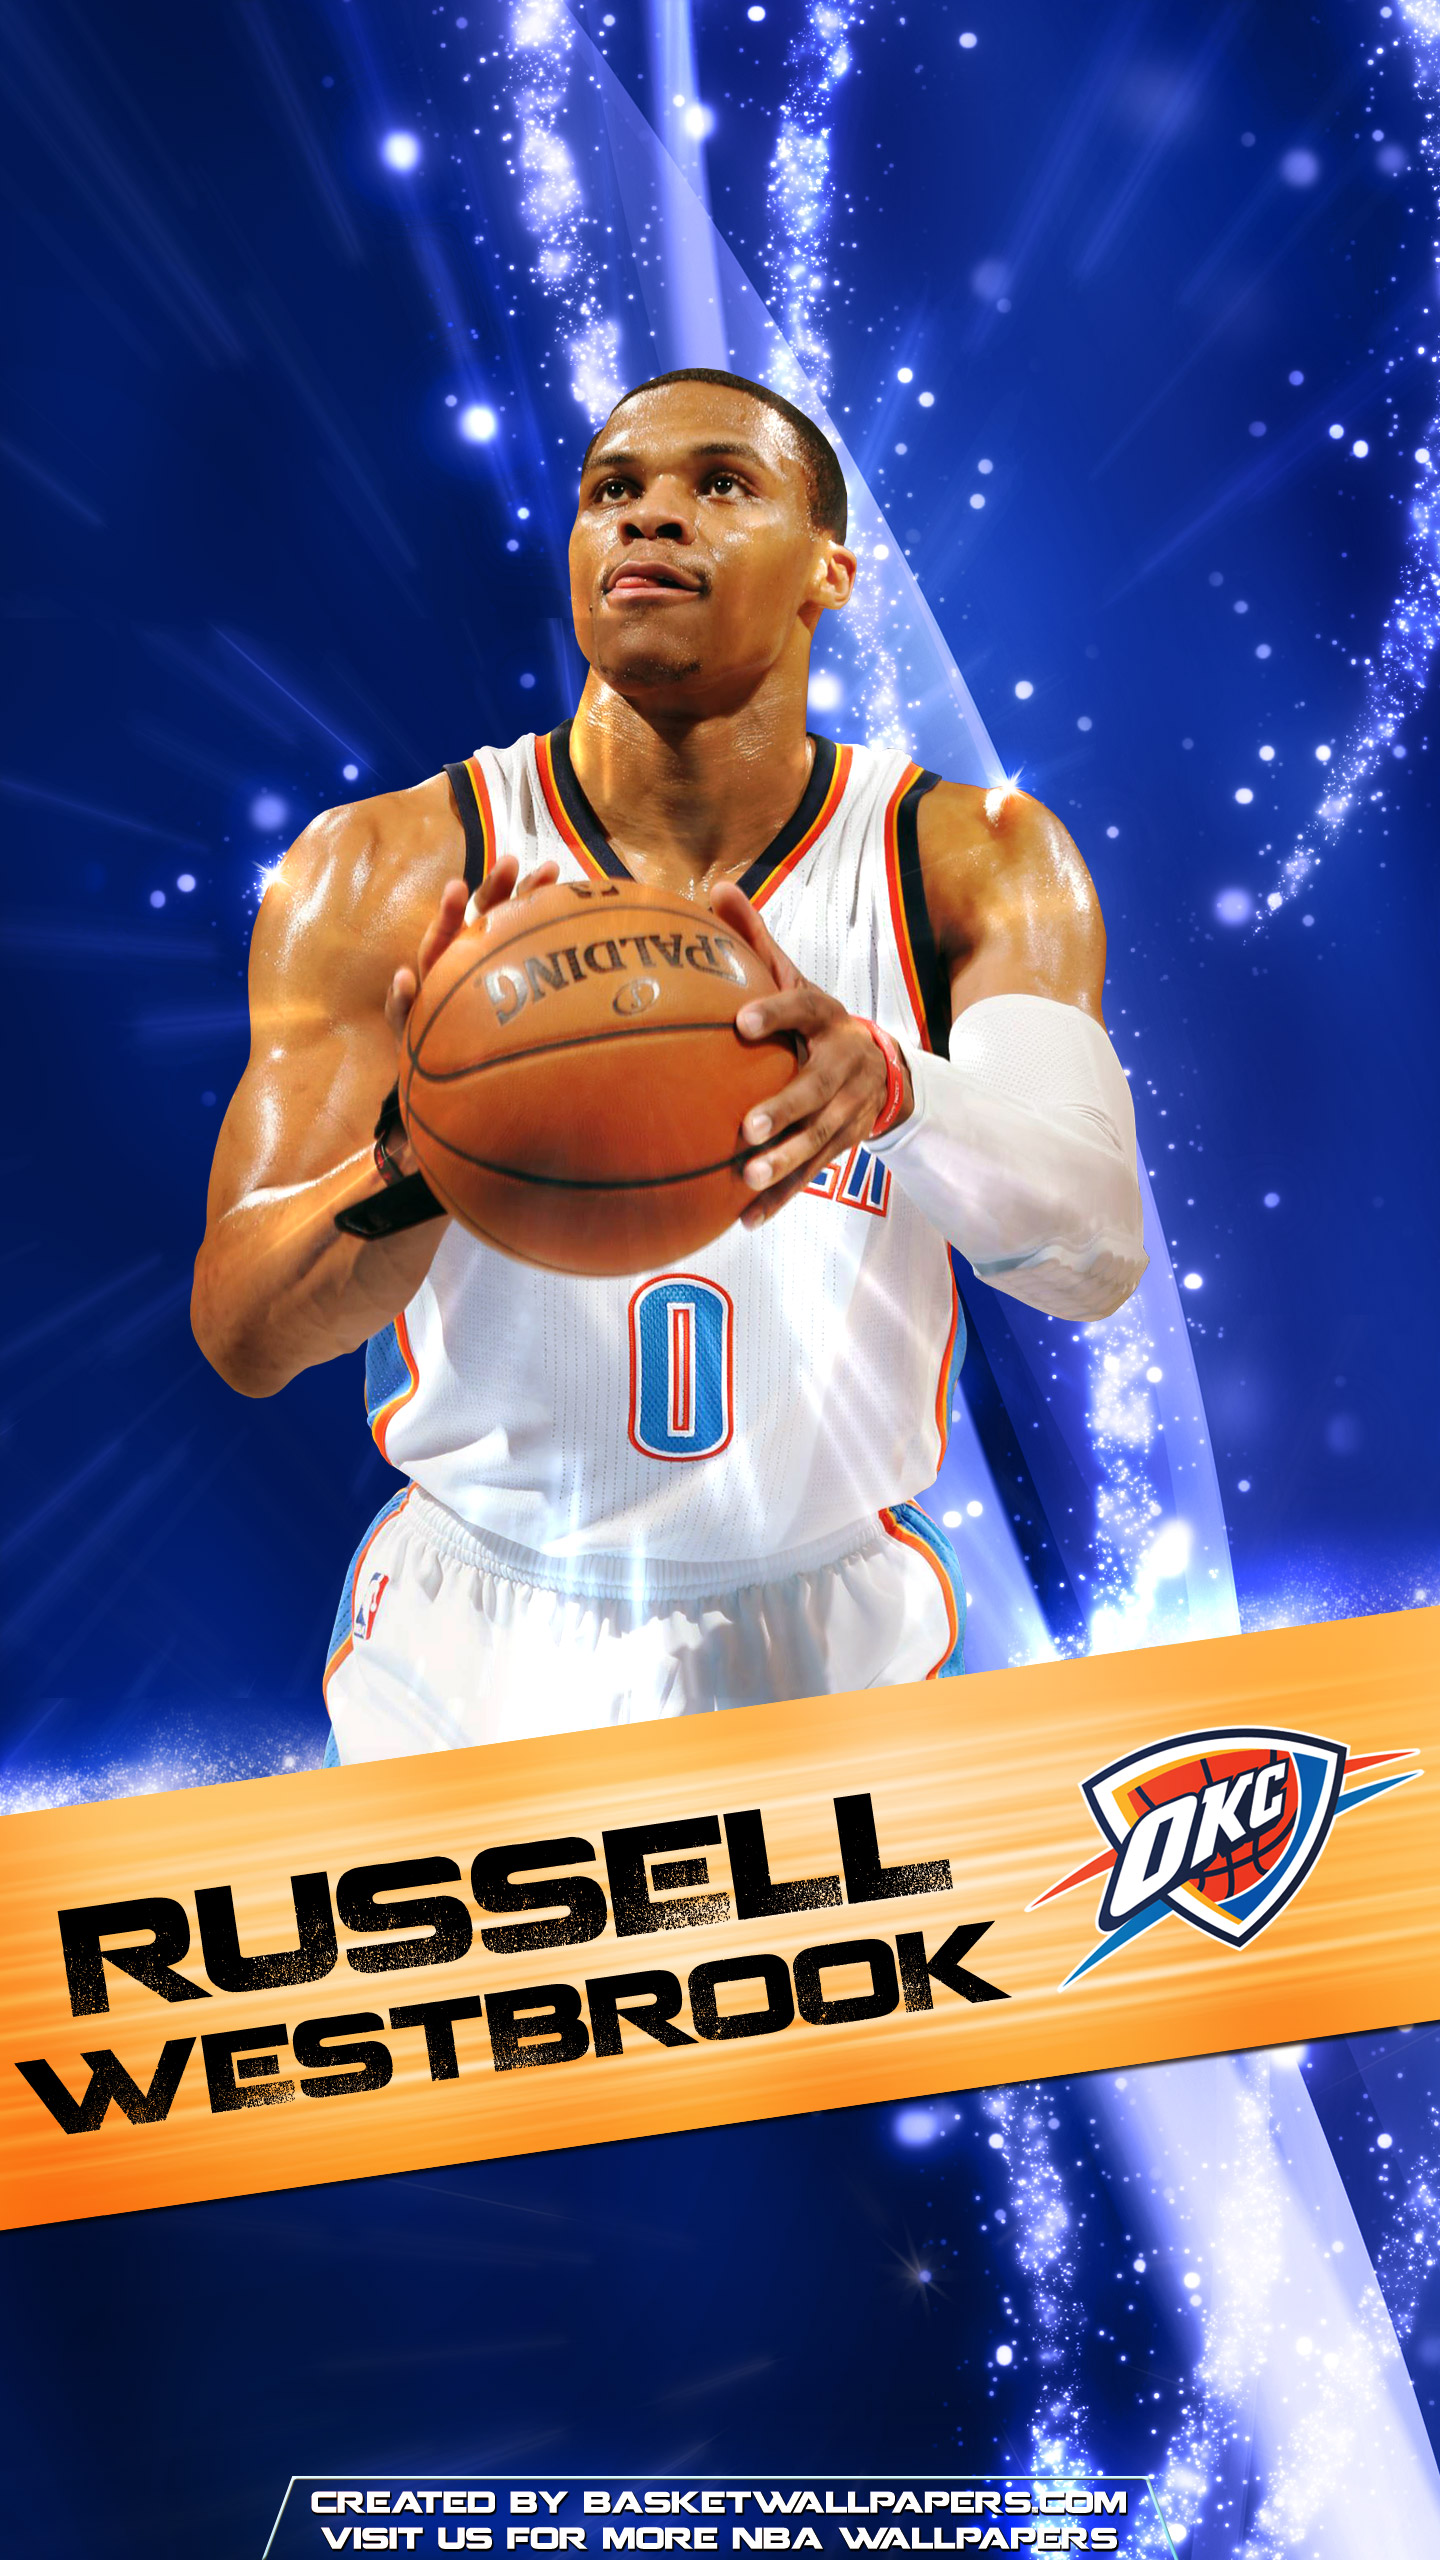 russell westbrook wallpaper iphone,basketball player,sports,action figure,team sport,basketball autographed paraphernalia